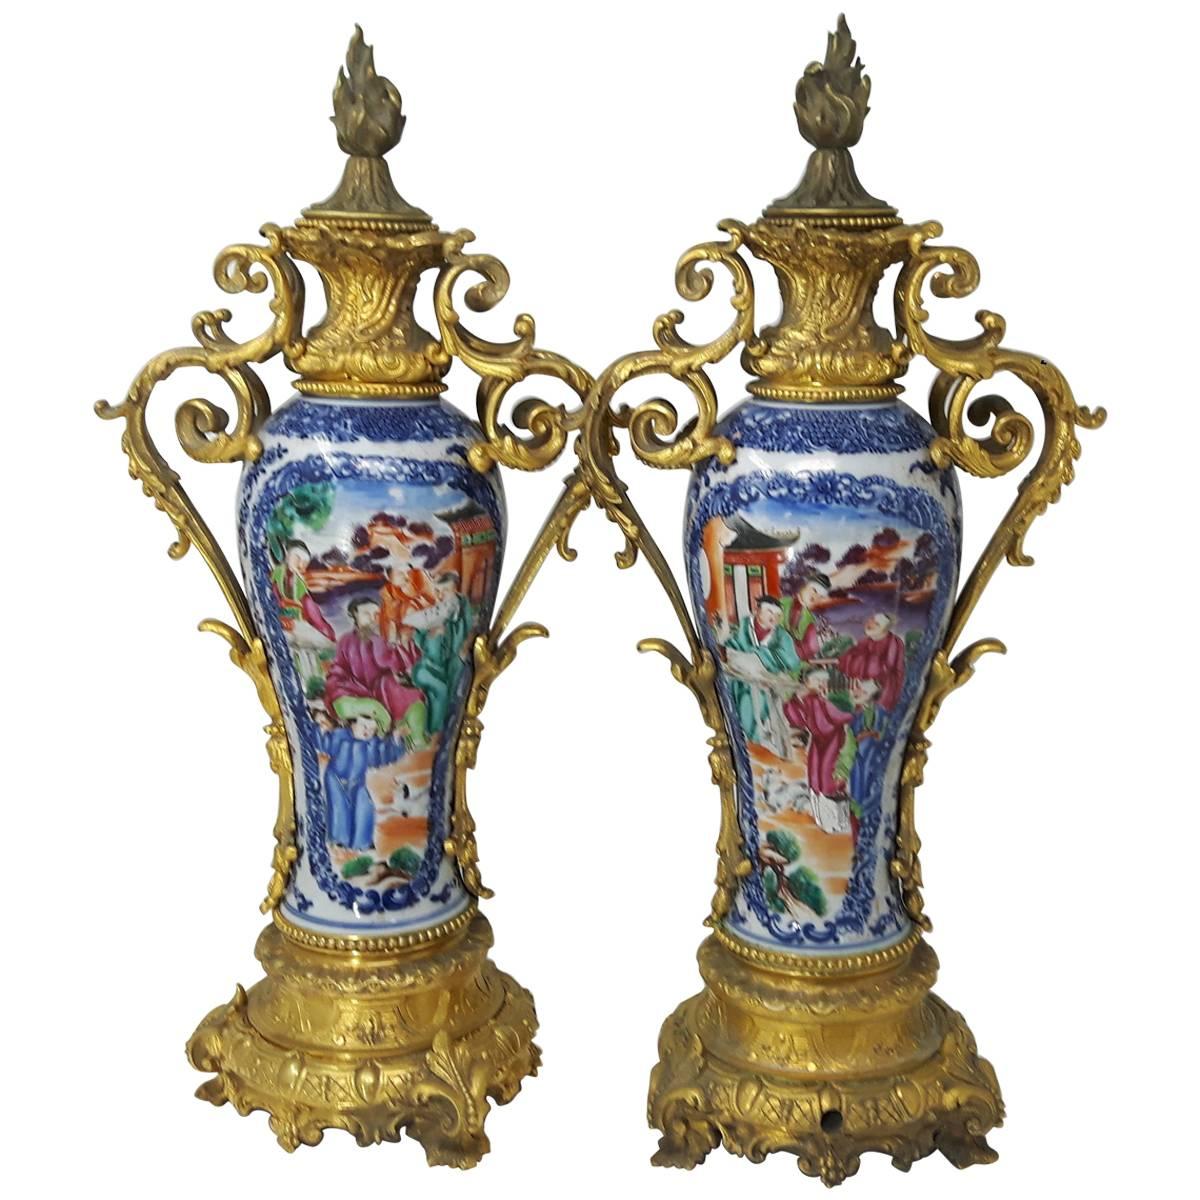 Pair of 18th Century Chinese Export Mandarin Vases, circa 1750